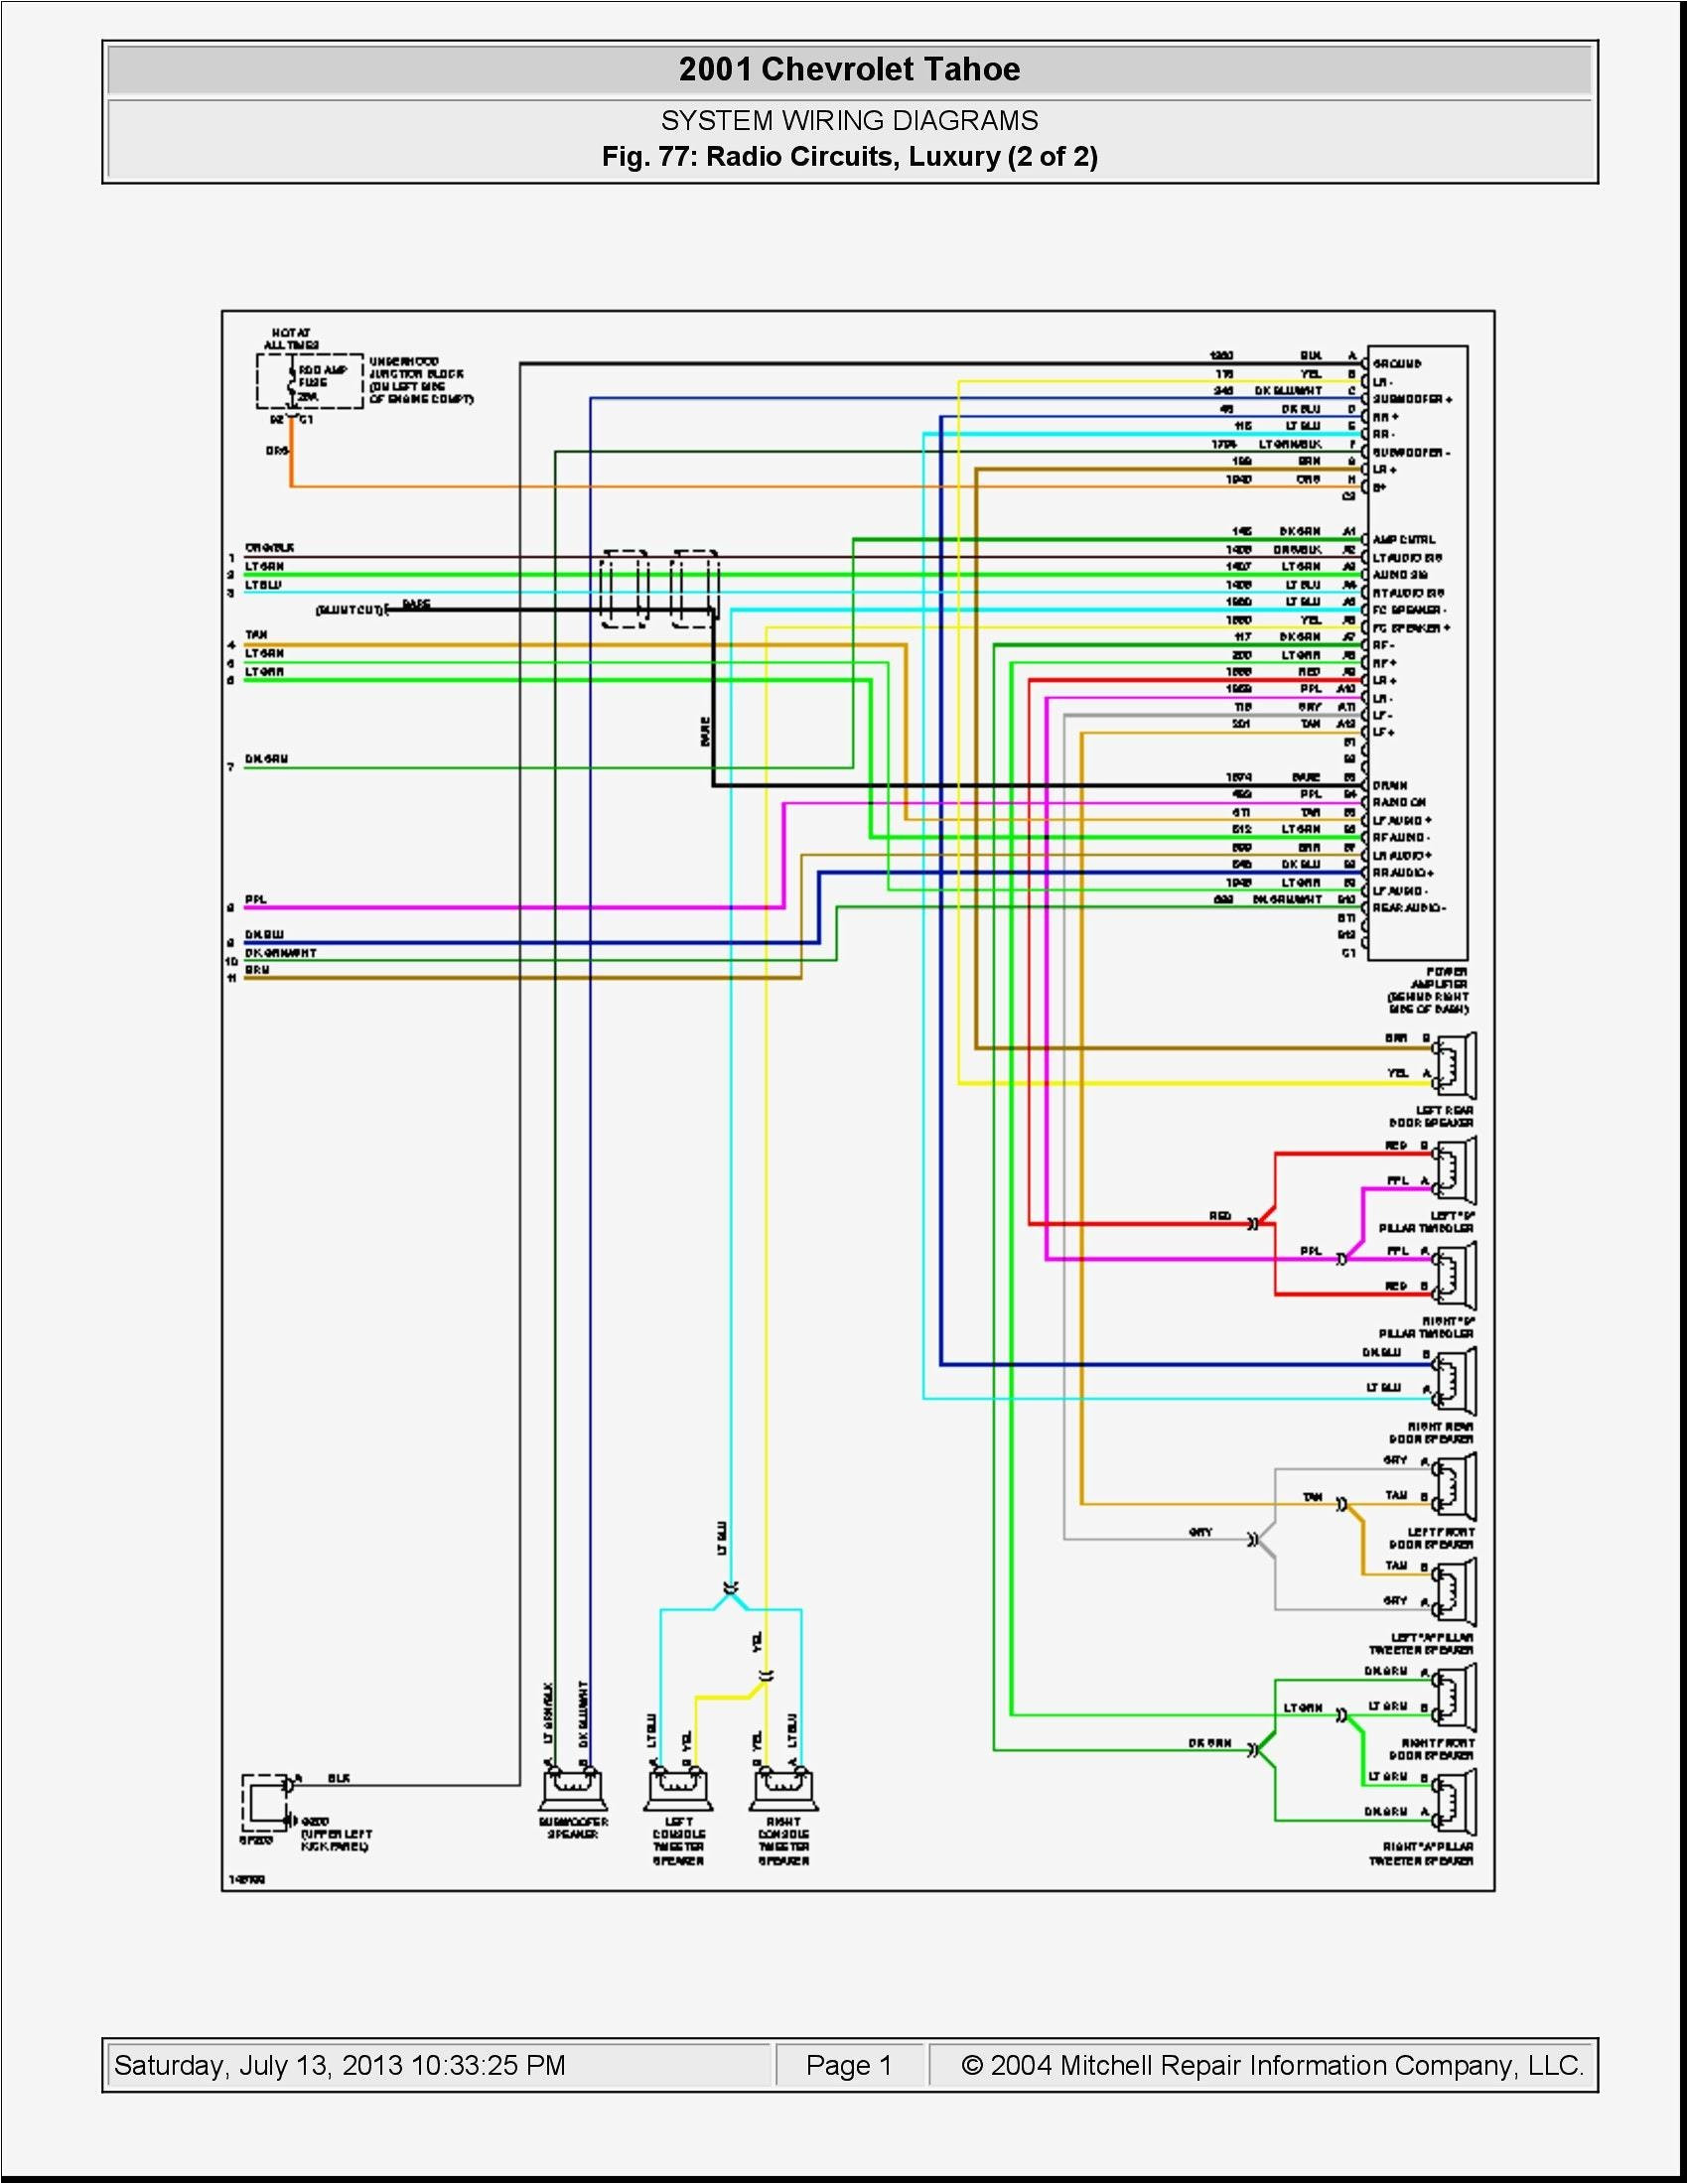 2002 trailblazer wiring diagram wiring diagram technic 2002 chevrolet